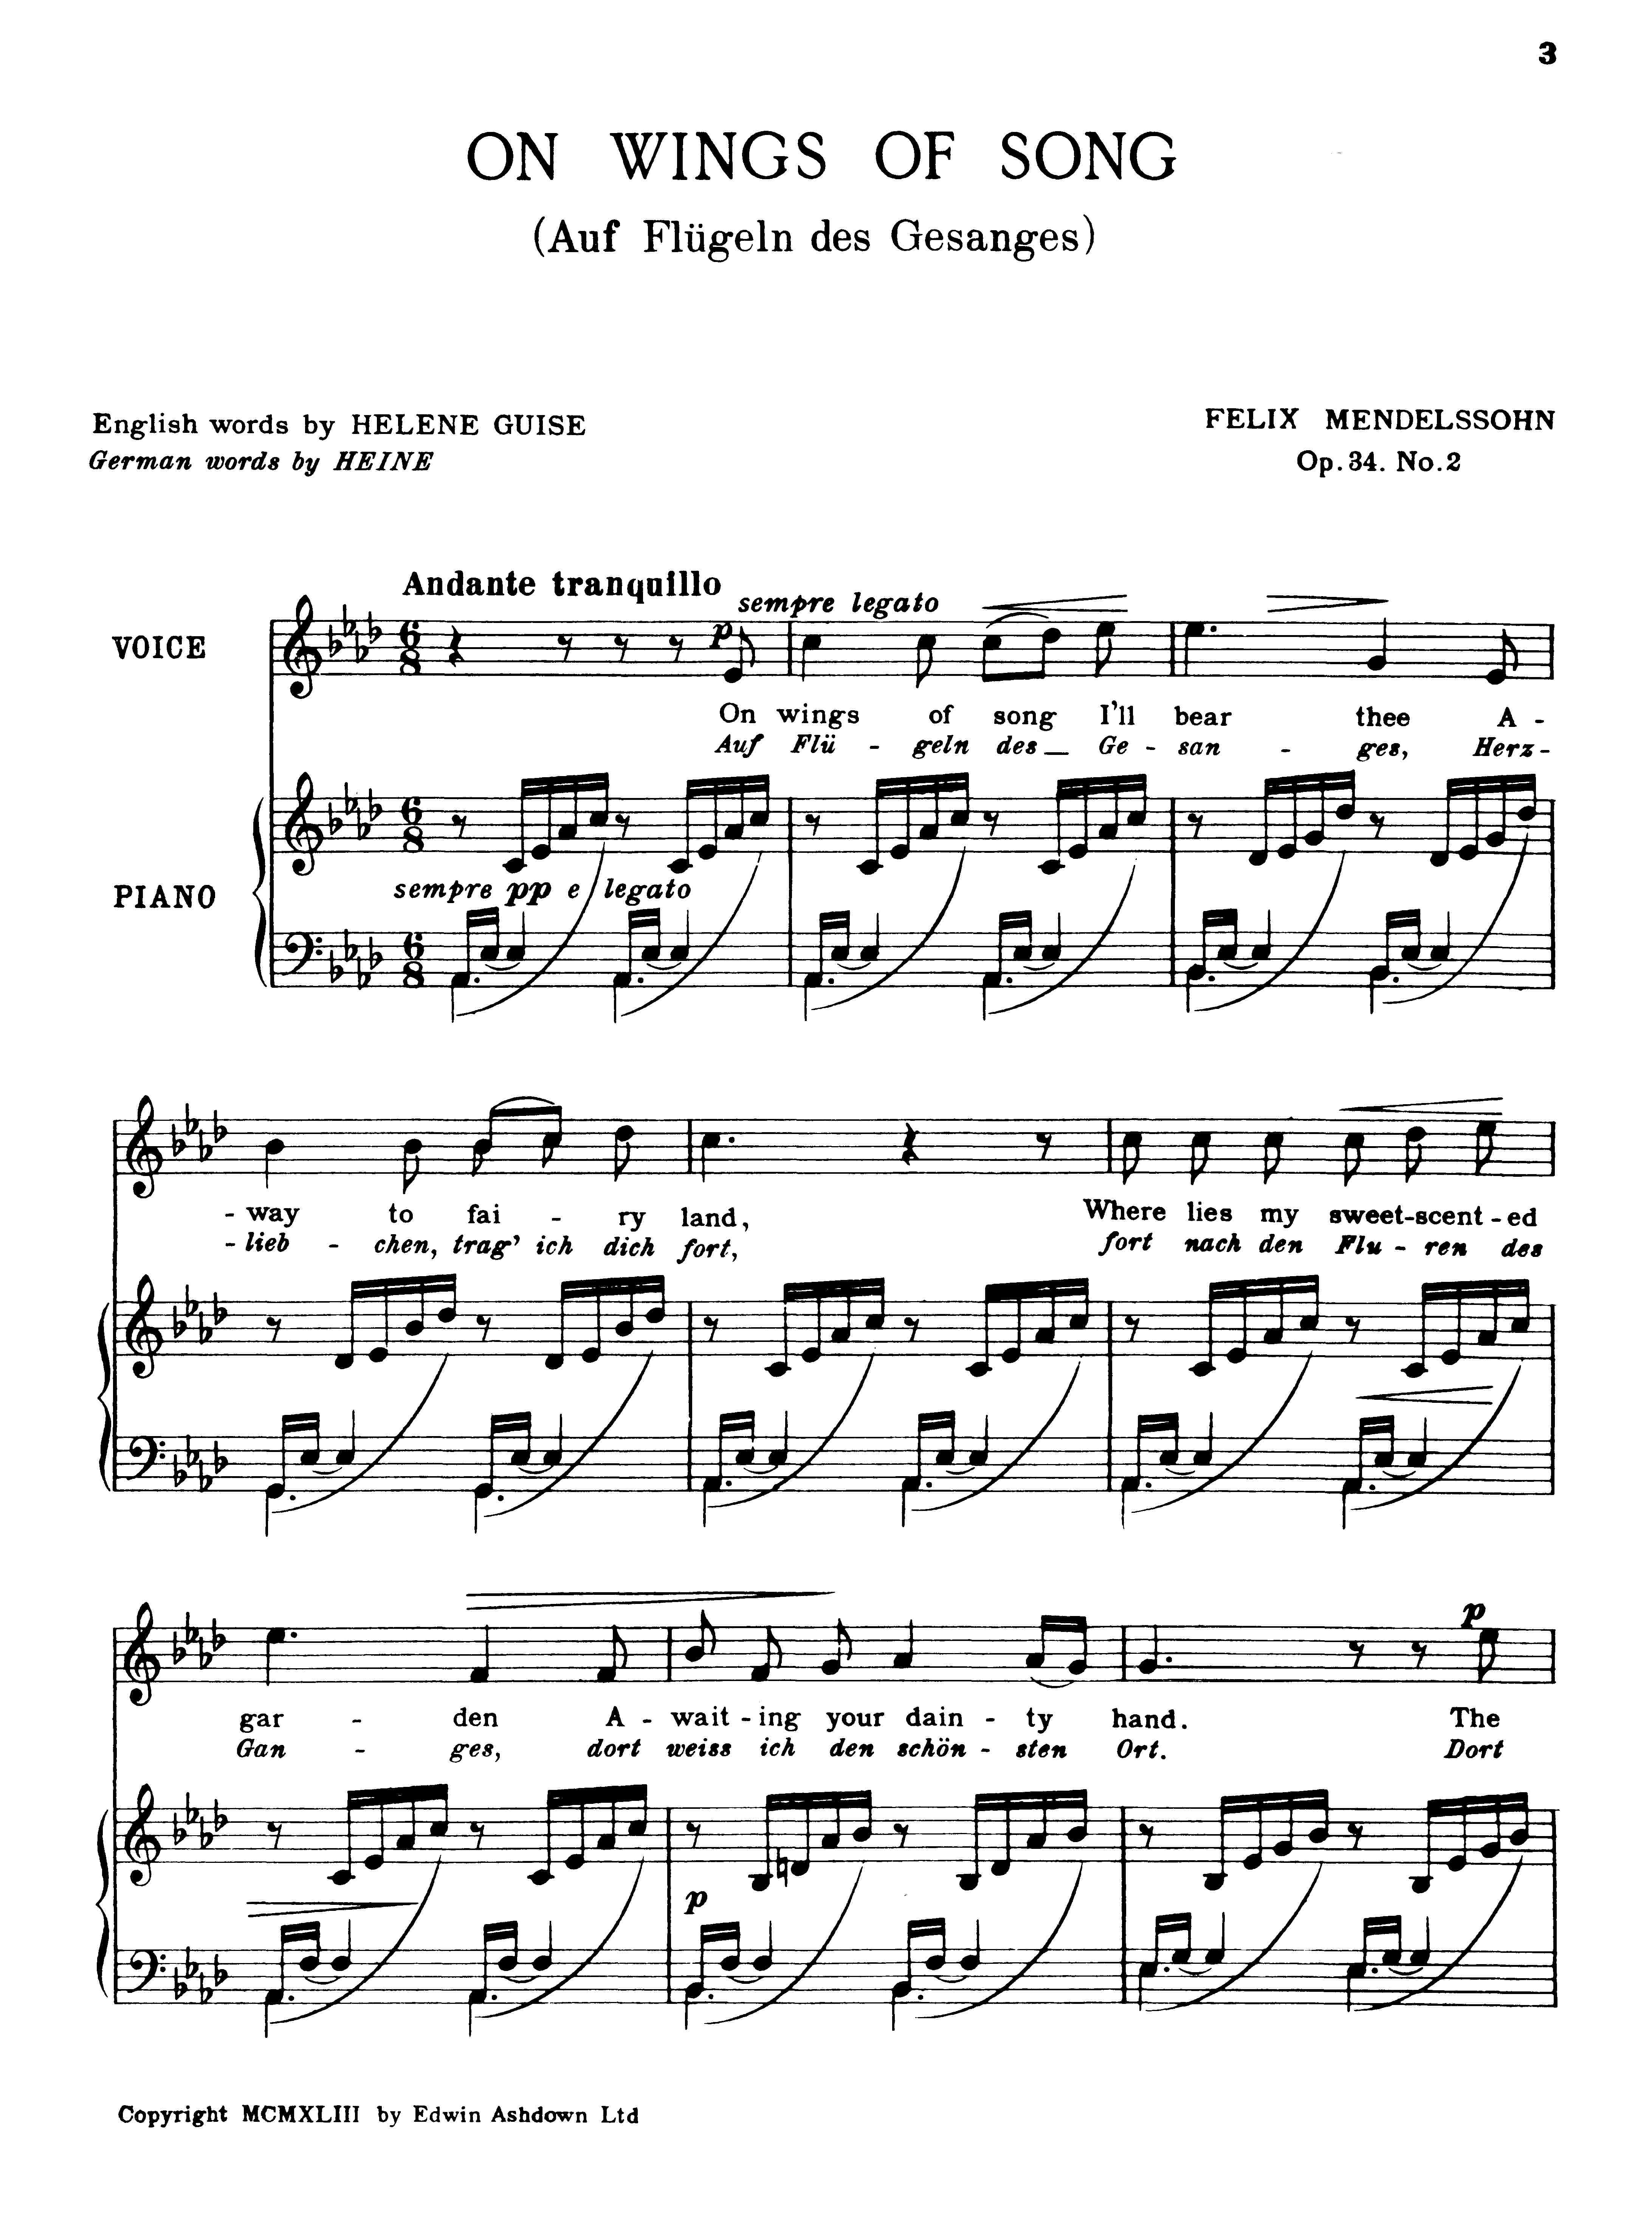 Felix Mendelssohn Bartholdy: On Wings Of Song Op. 34 No. 2: Voice: Vocal Work